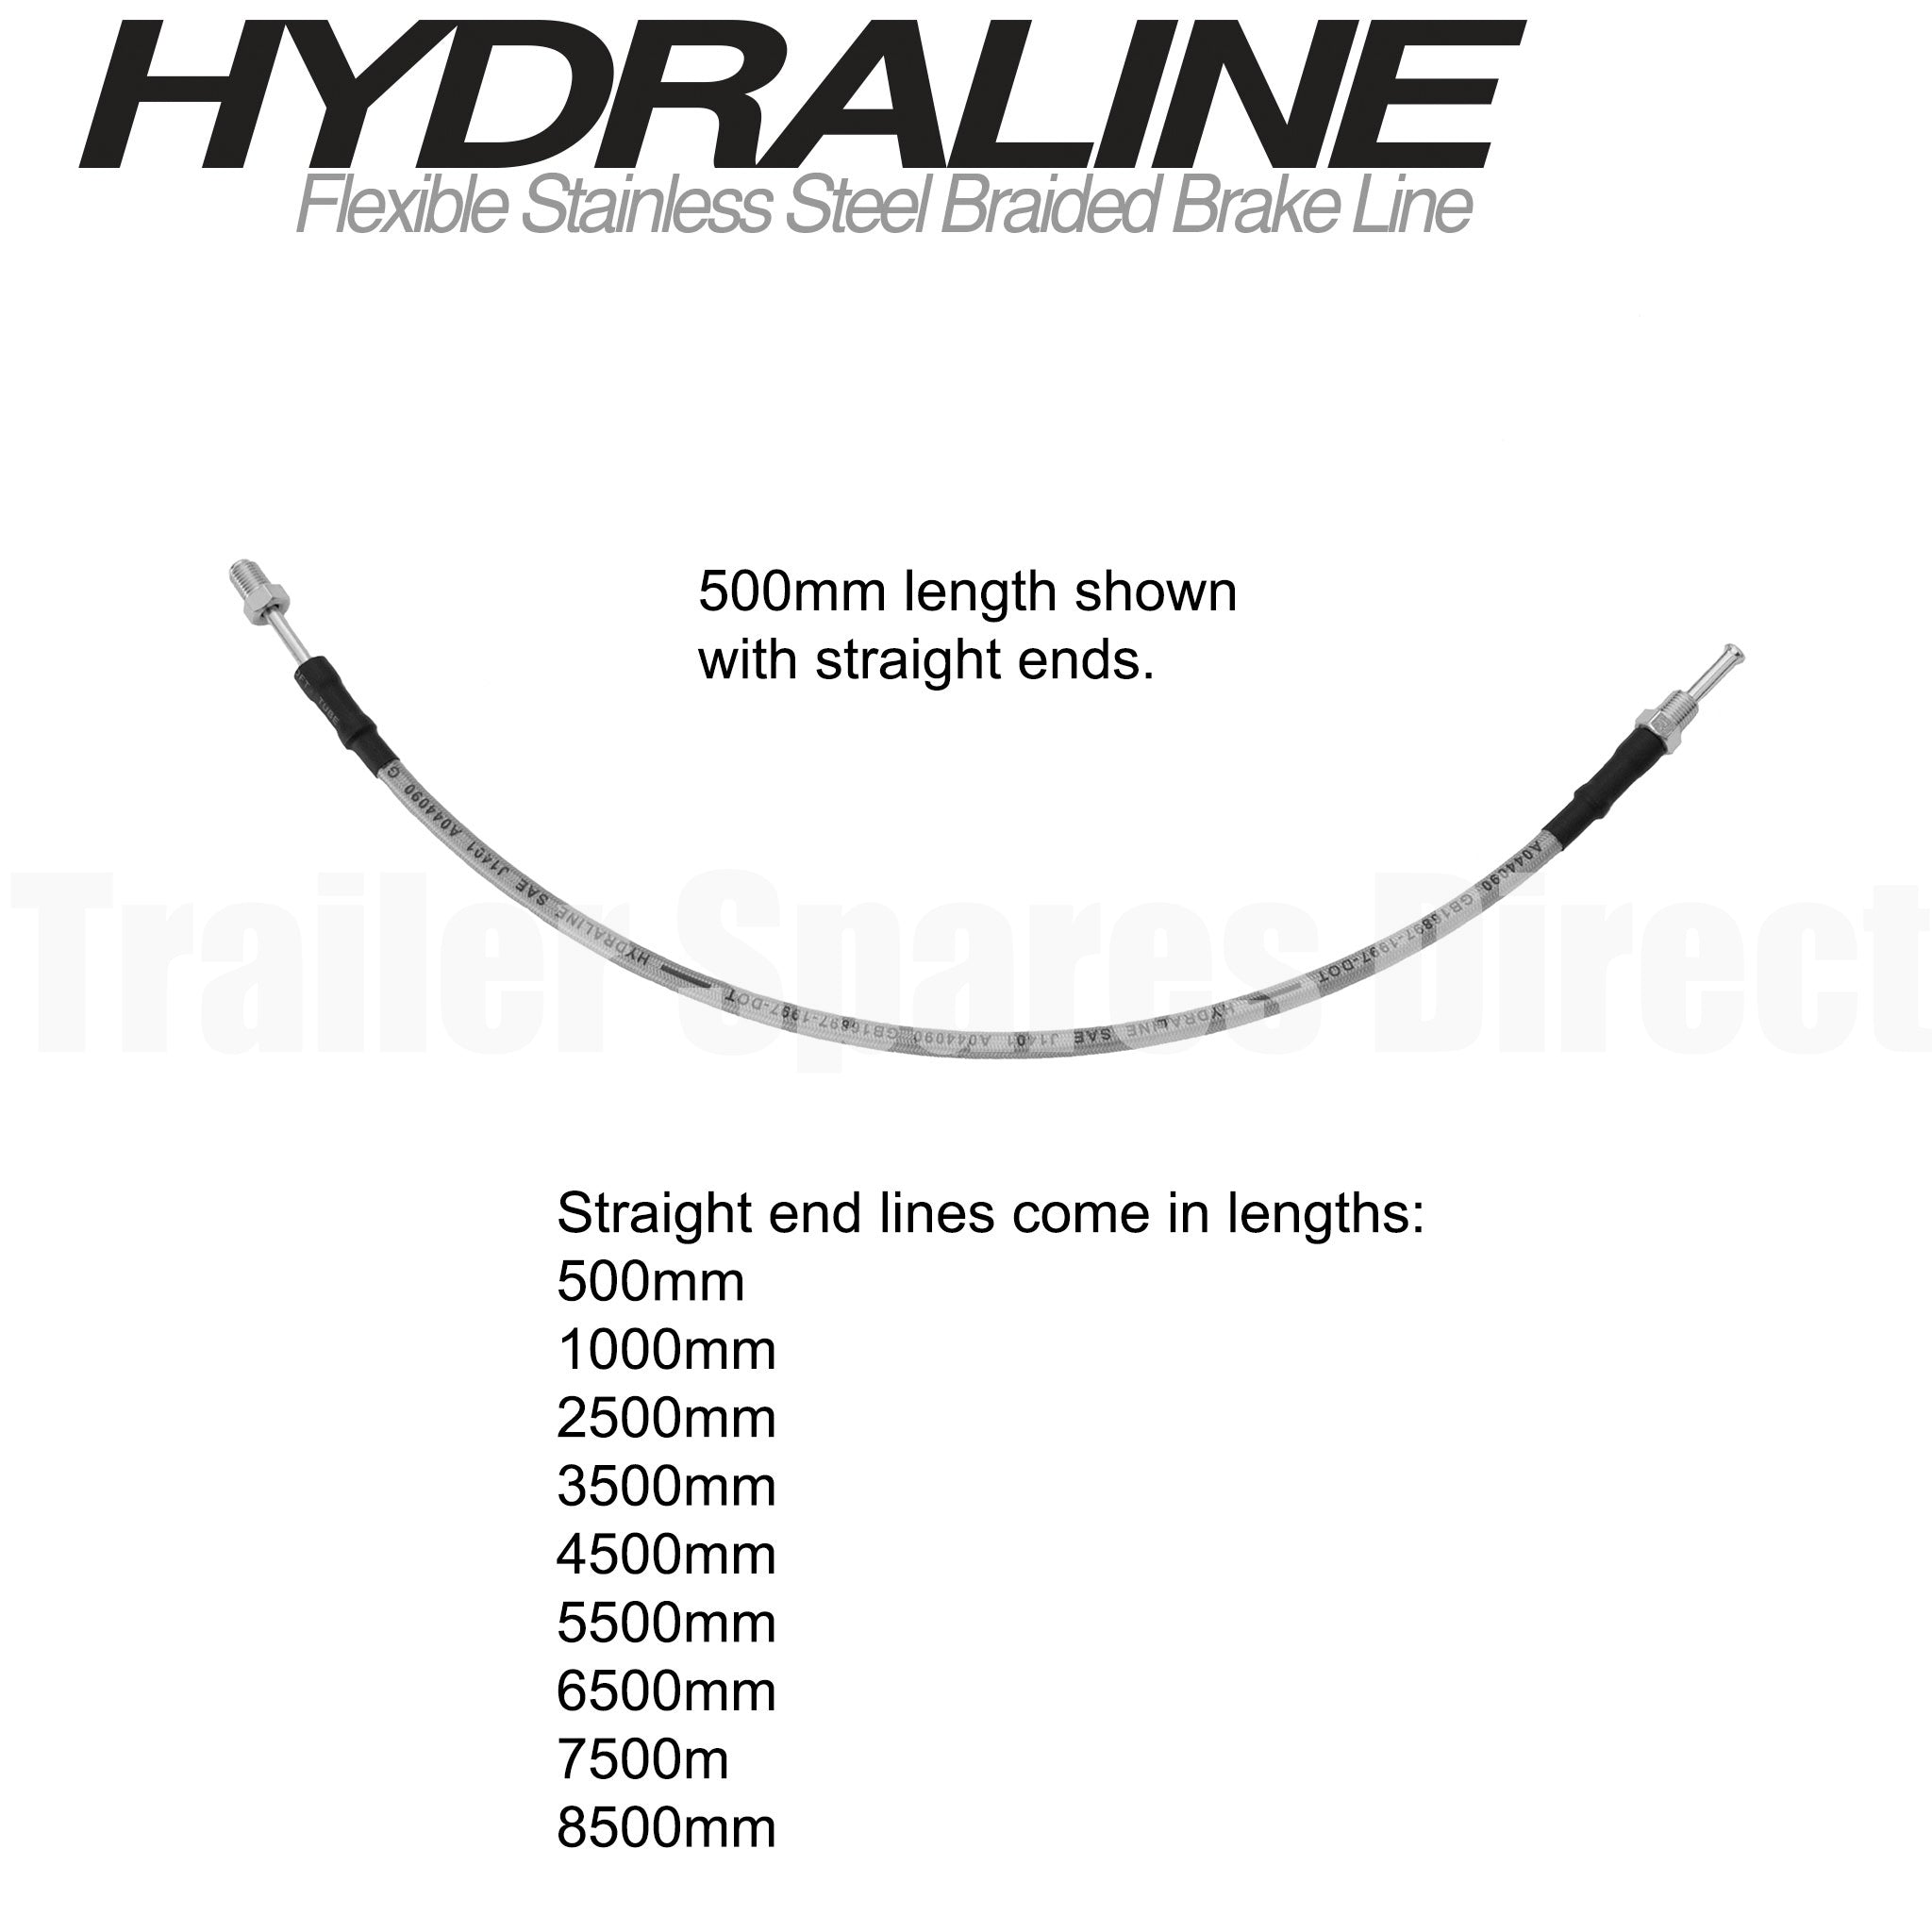 6500mm HydraLine brake hose